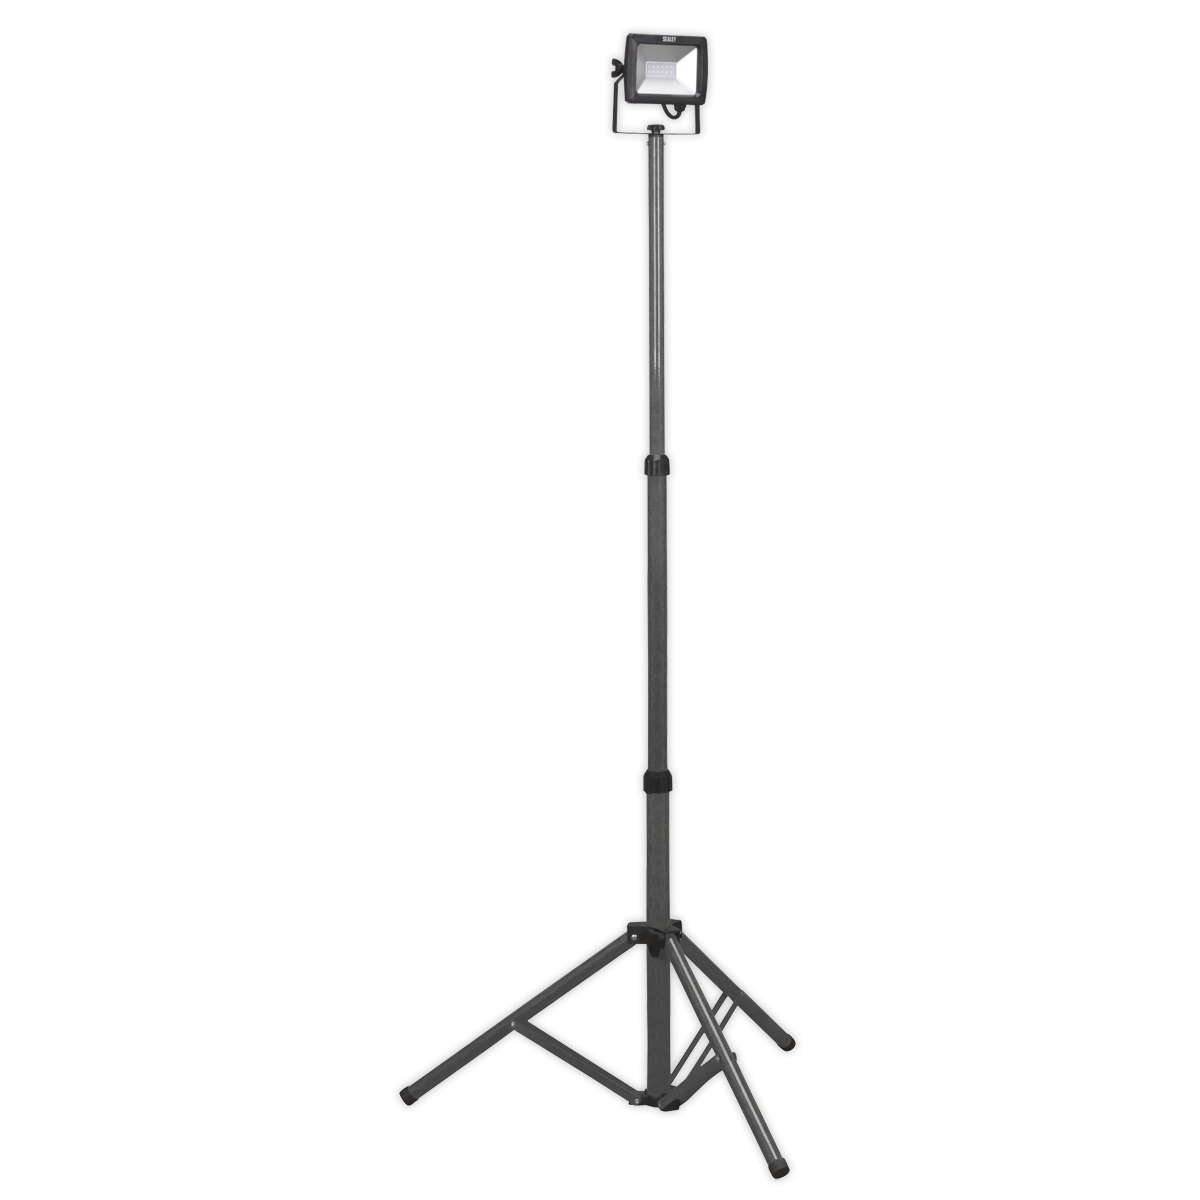 Sealey Telescopic Floodlight 10W SMD LED 230V - We Sell Any Tool